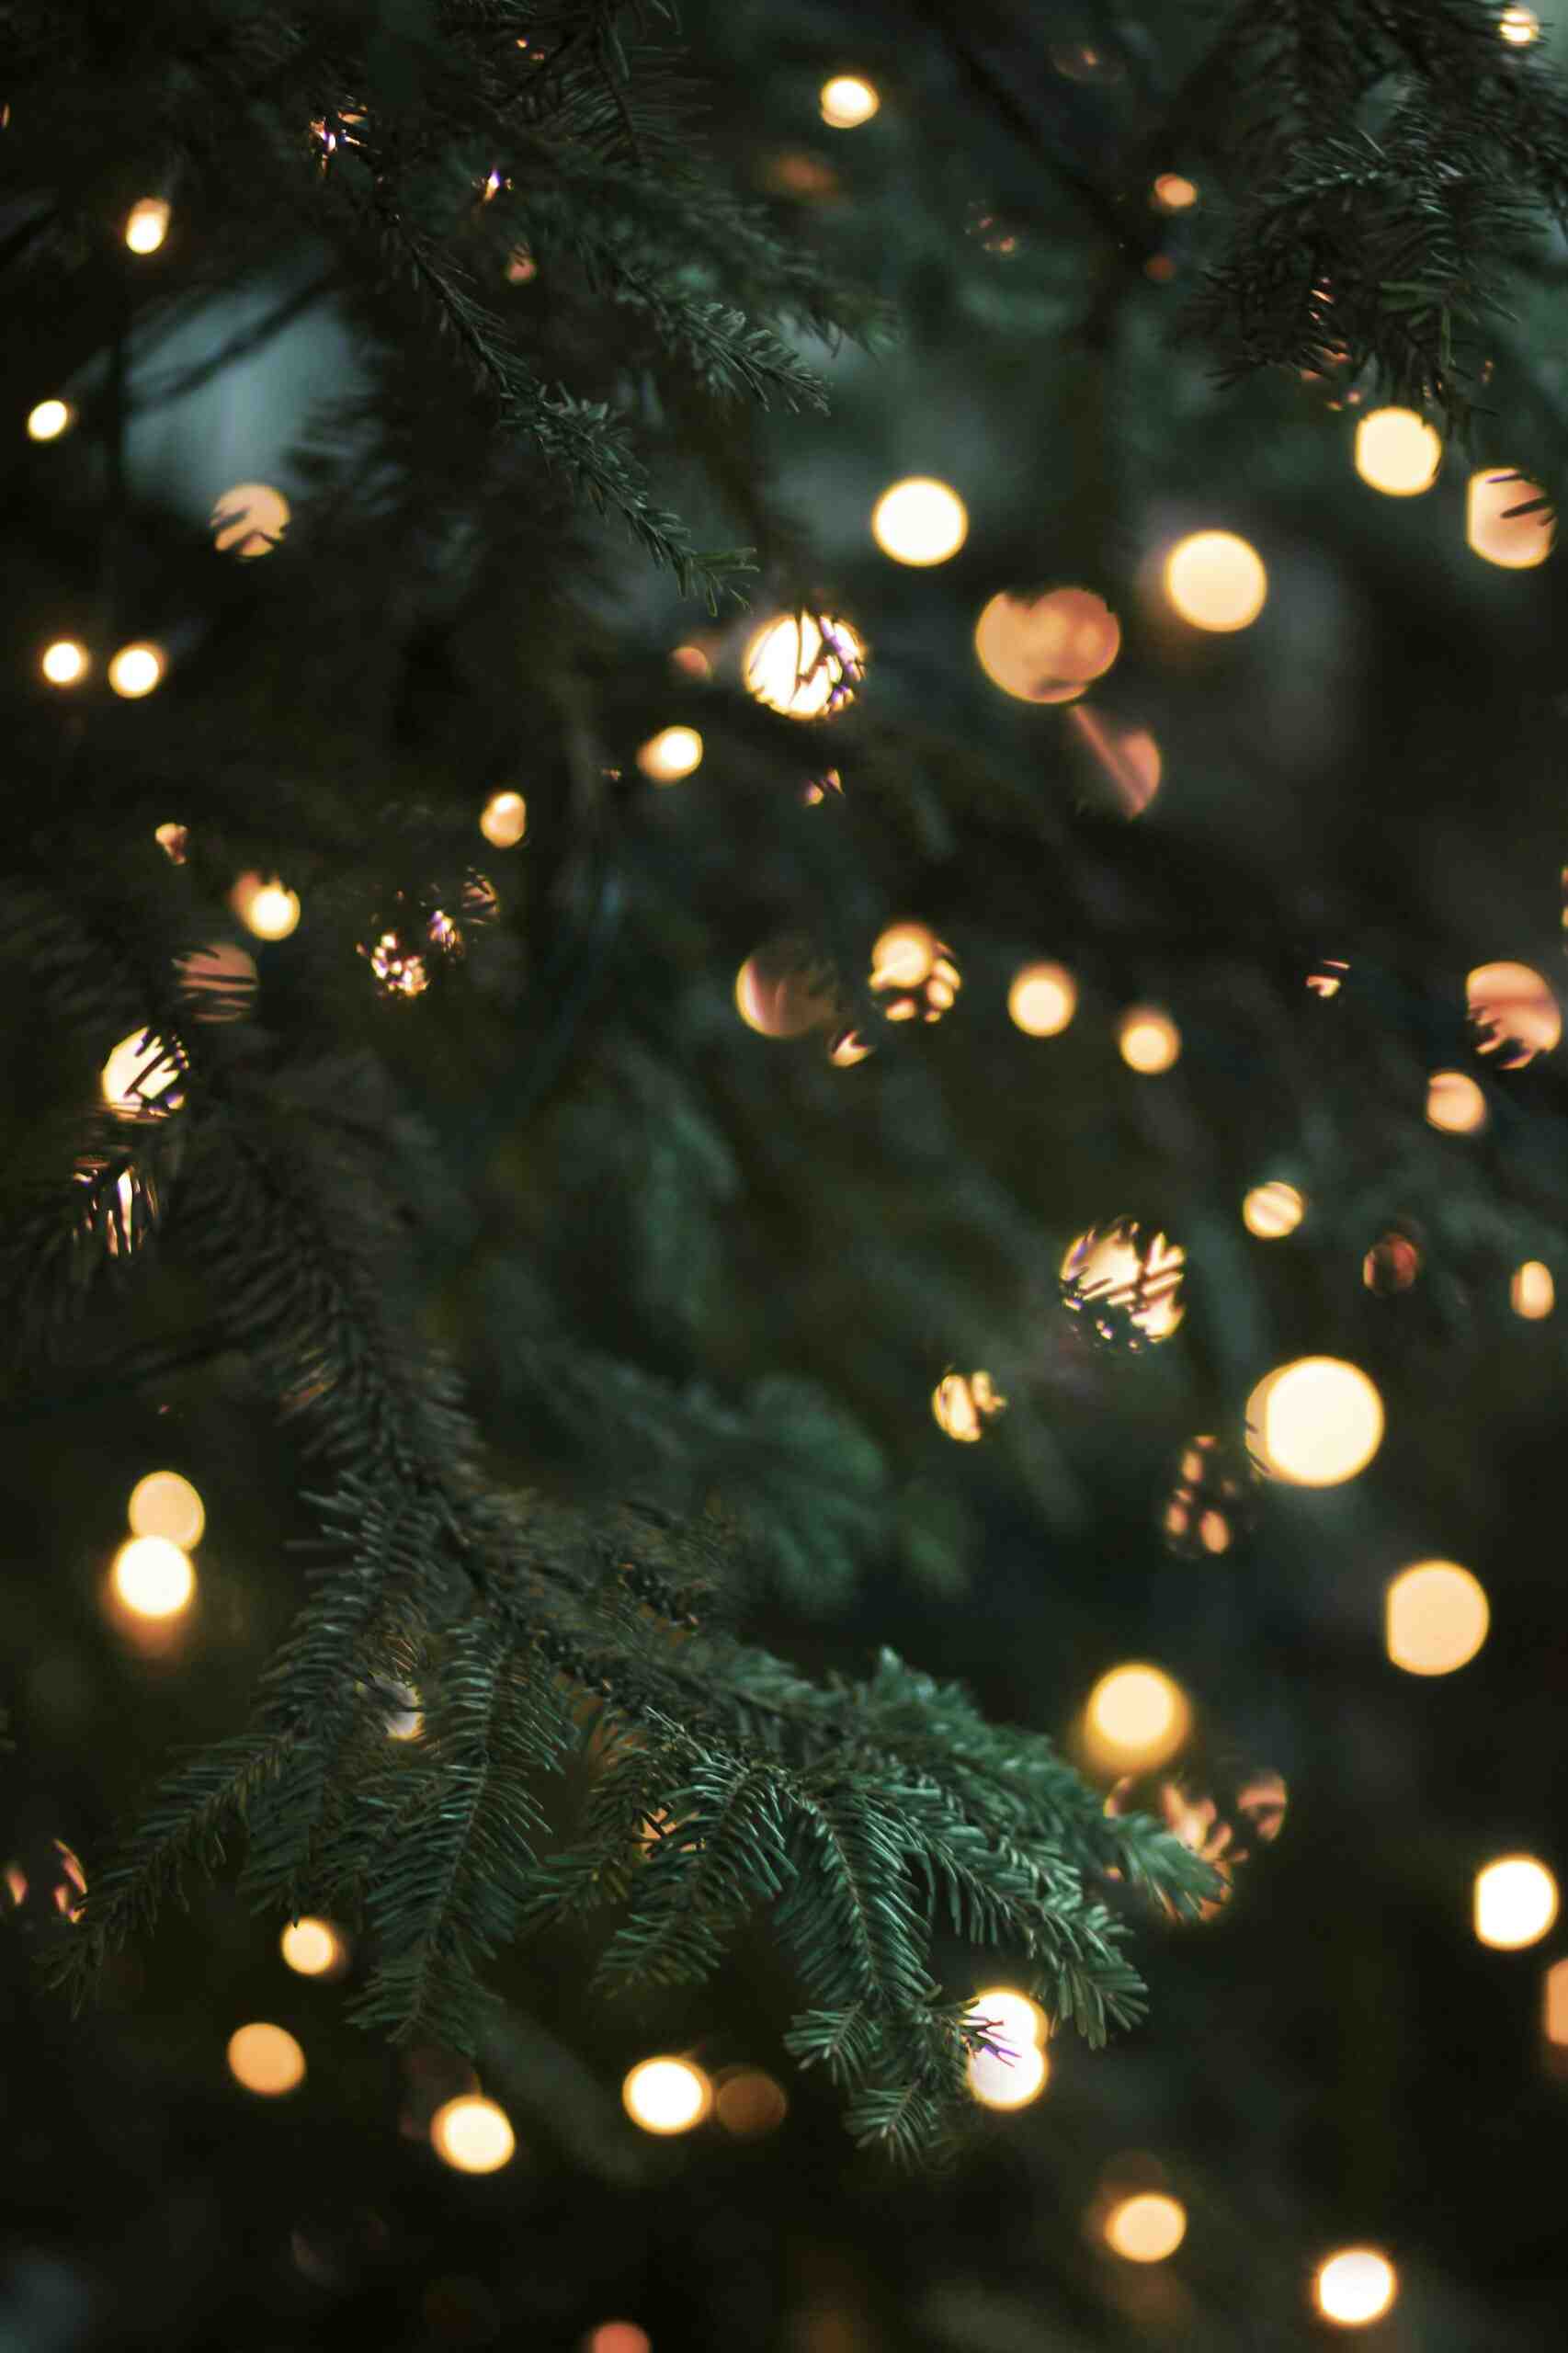 mindfulness with Christmas lights